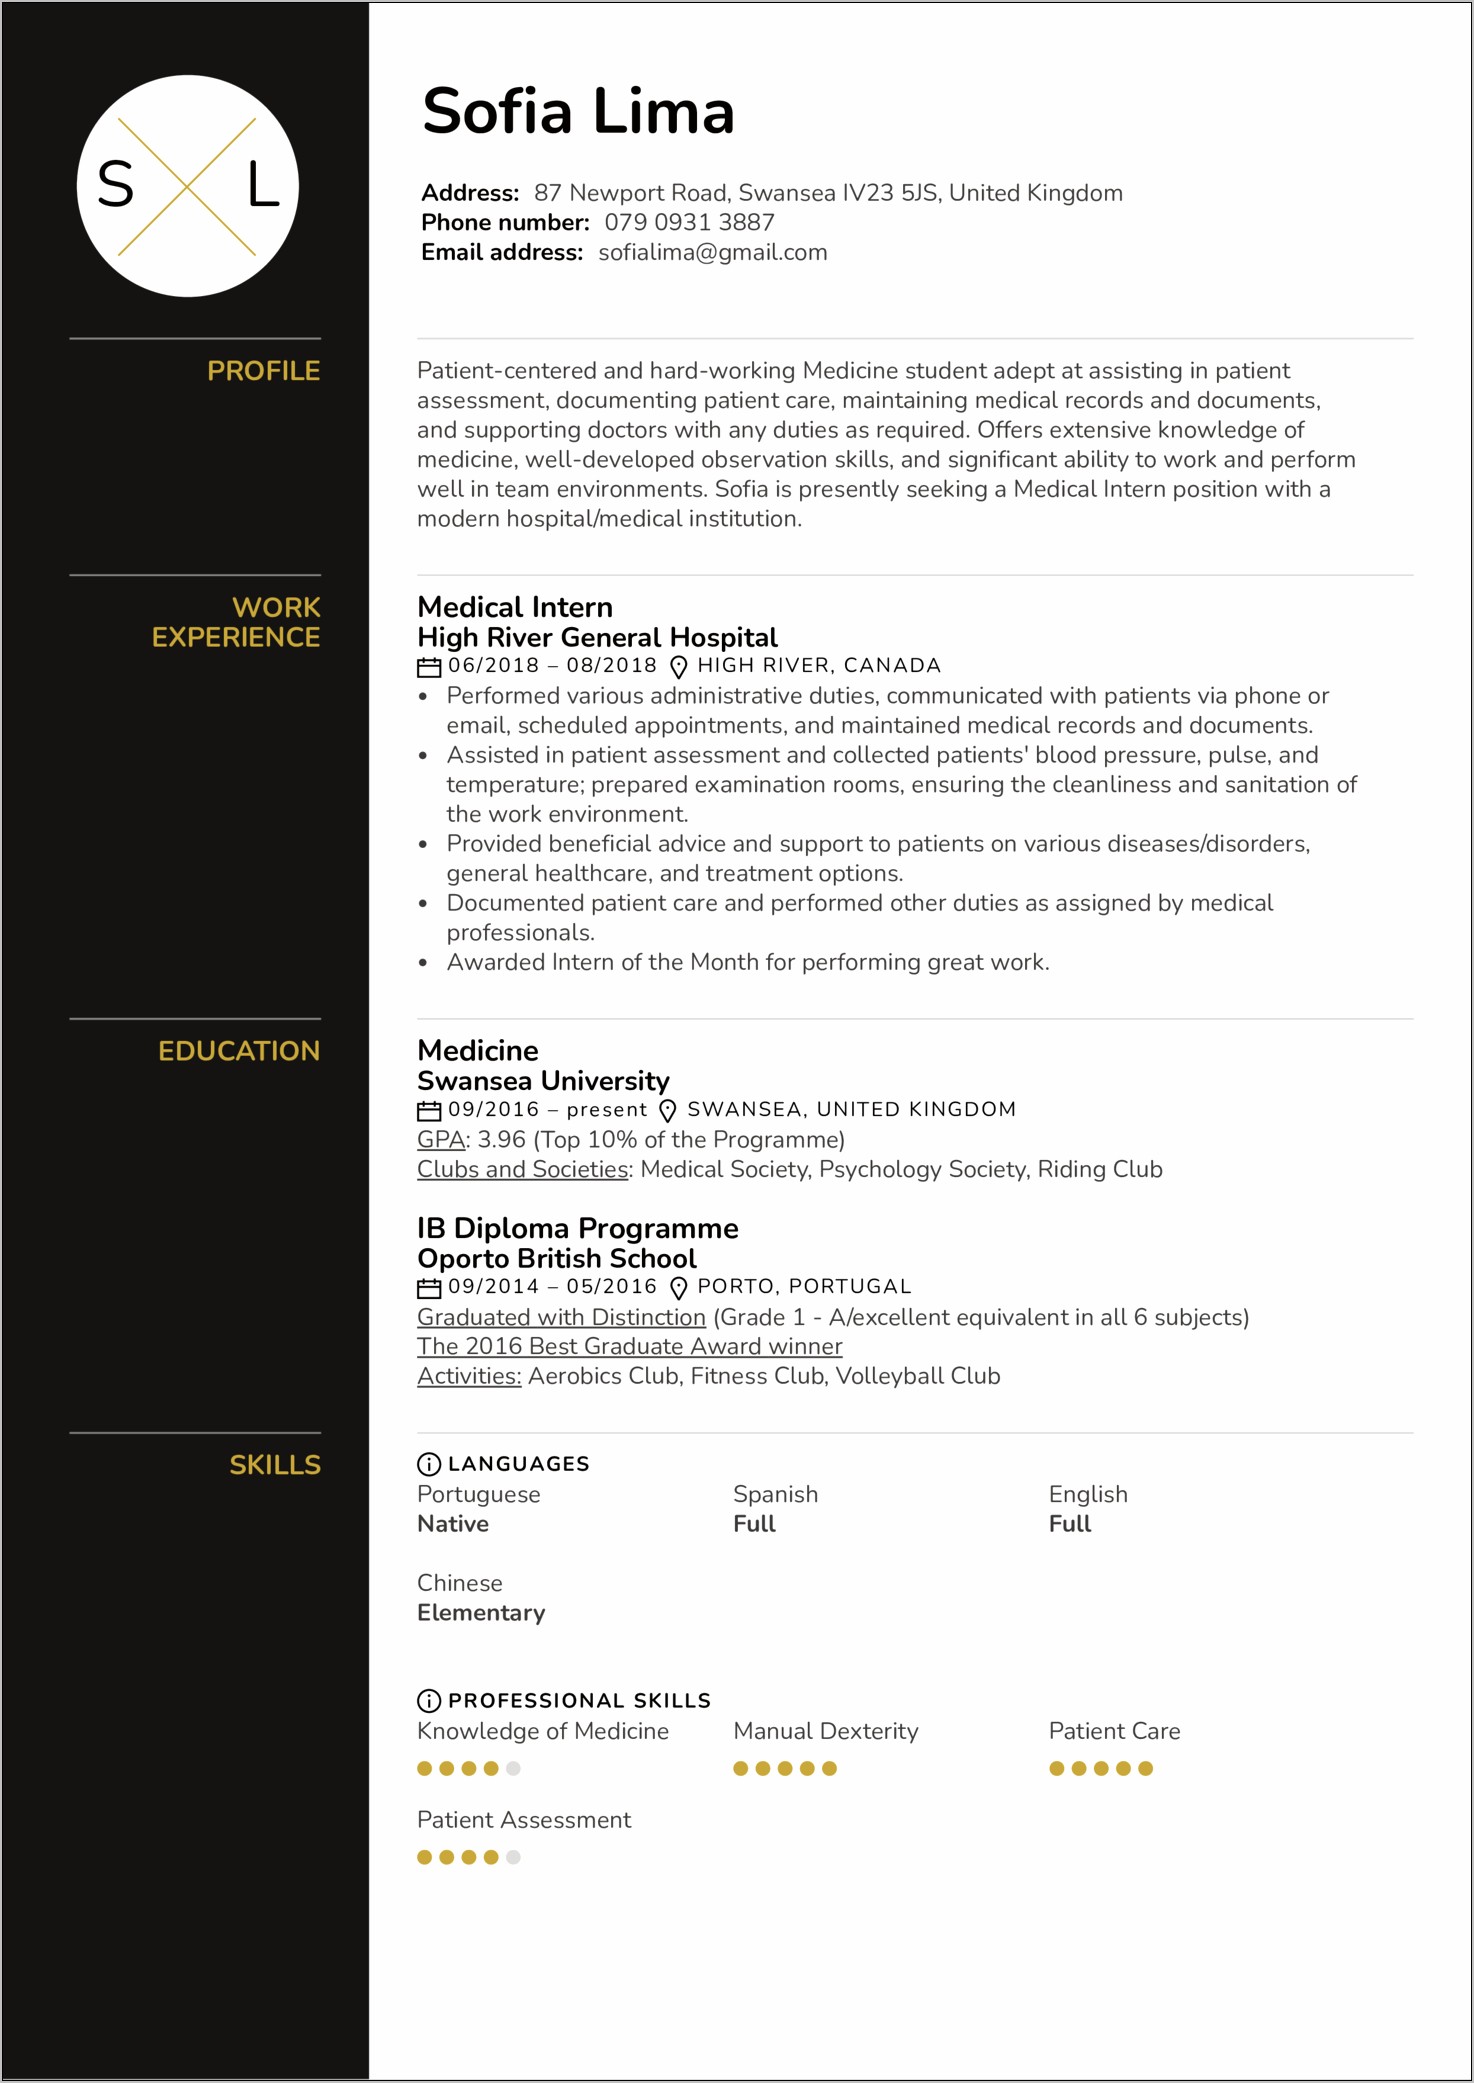 Medical Record Job Description For Resume